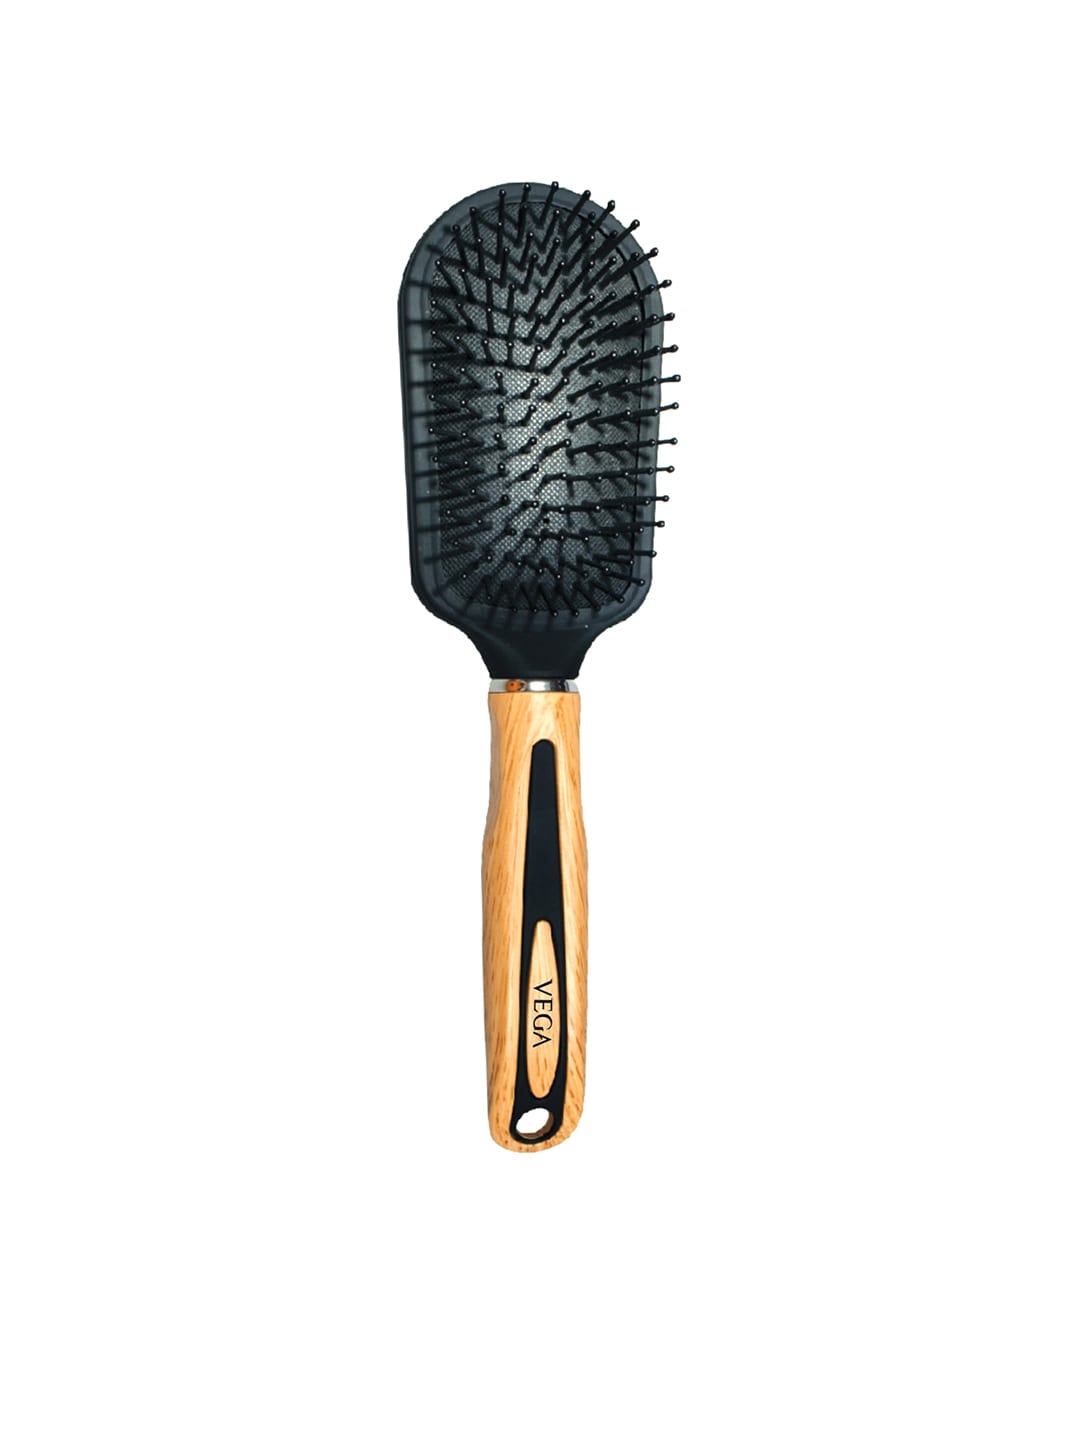 VEGA Unisex Black & Brown Cushioned Paddle Hair Brush Price in India